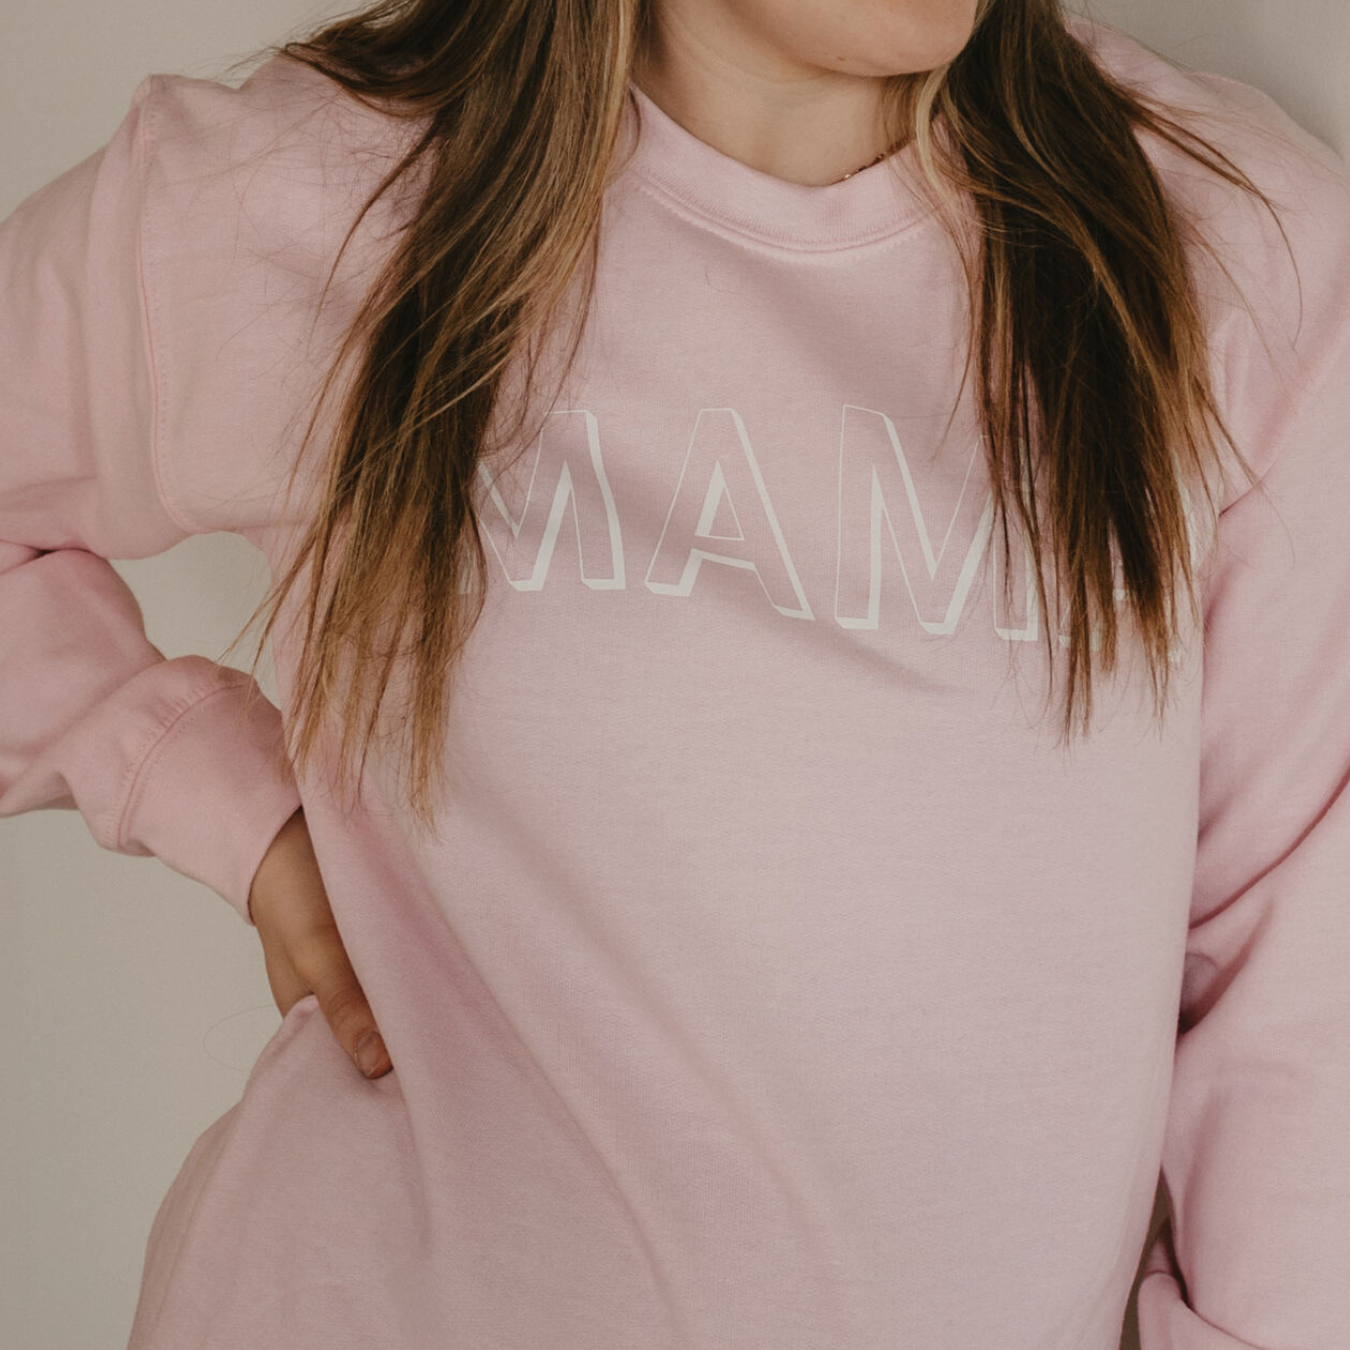 Mama Pink Sweatshirt